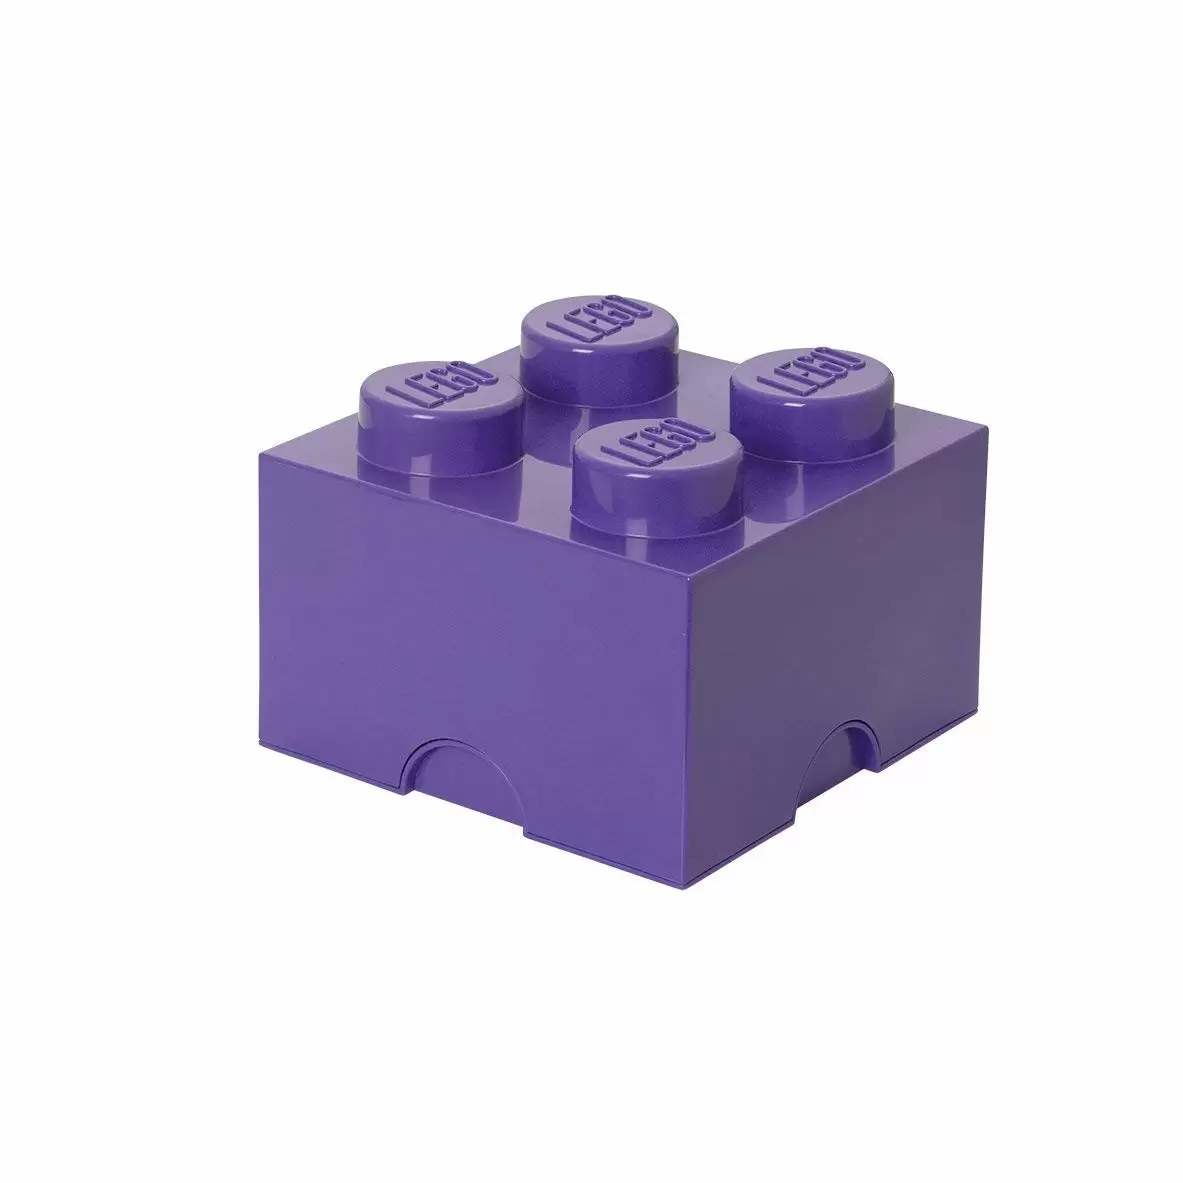 Rangements LEGO - Brique de rangement LEGO Violet 4 tenons